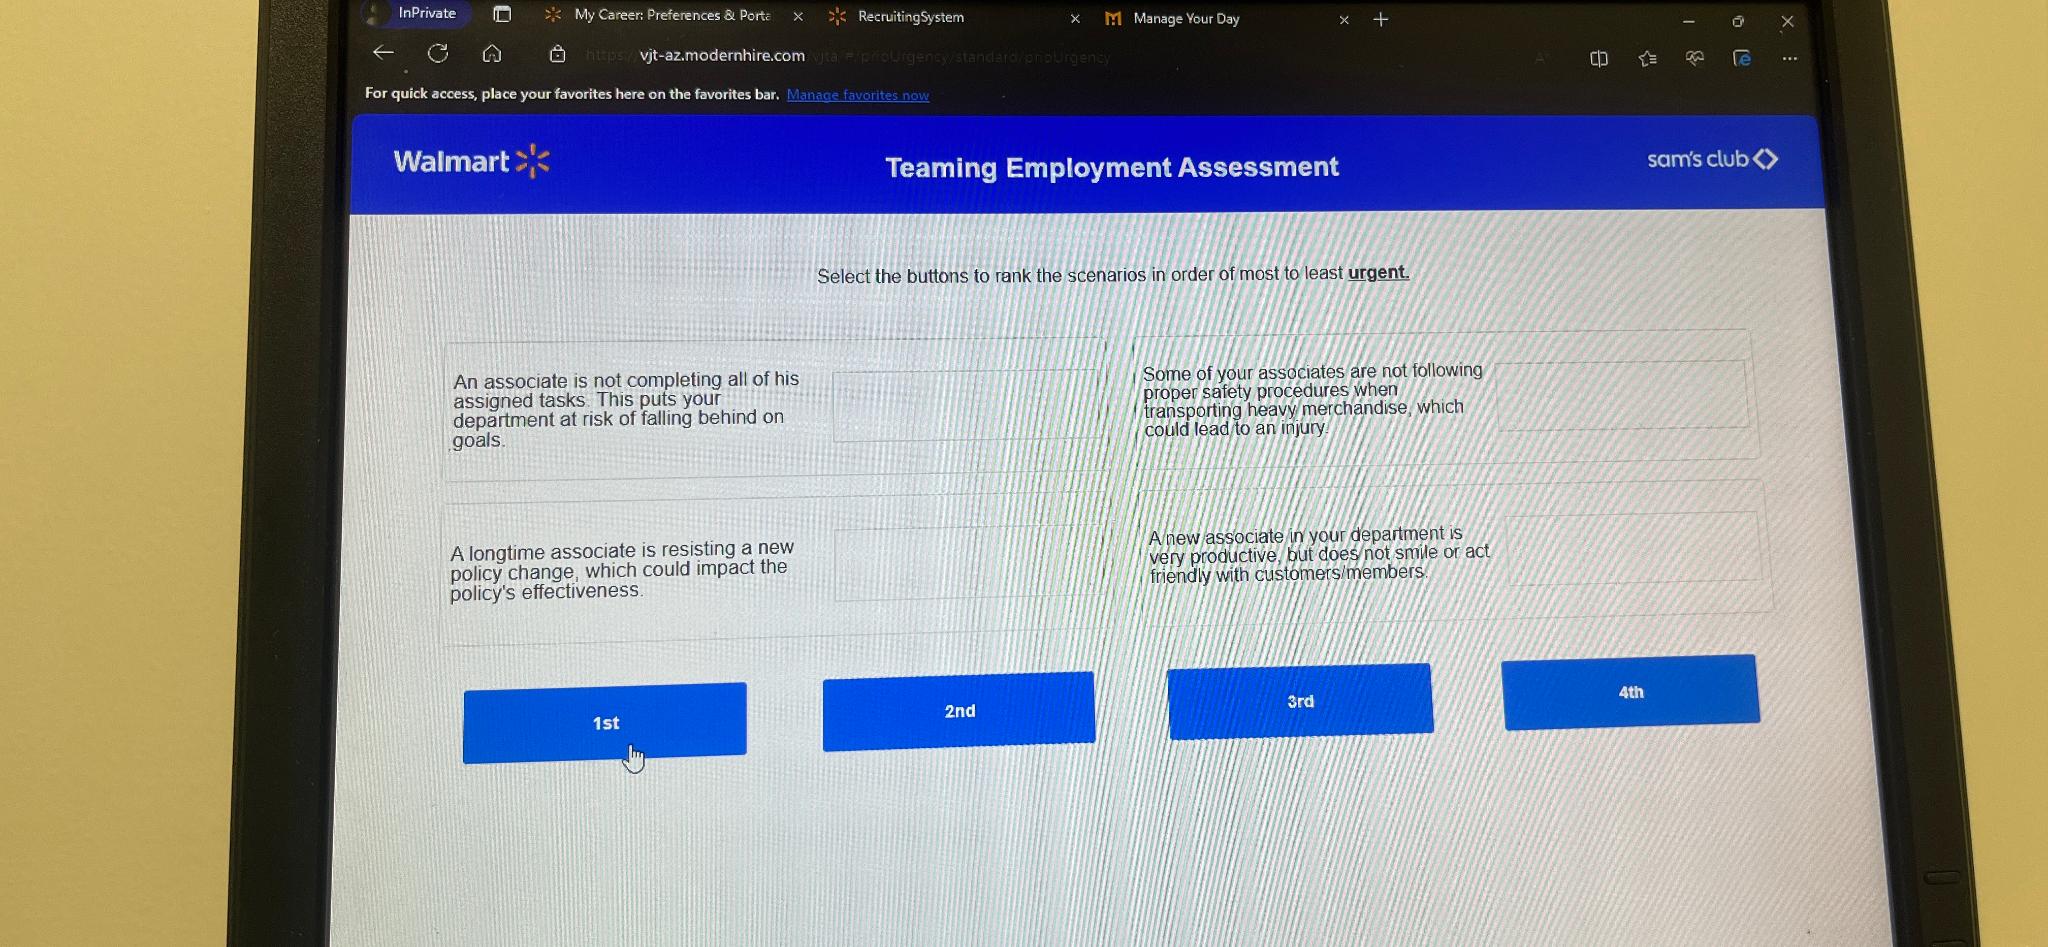 Solved Walmart =Teaming Employment Assessmentsam's club